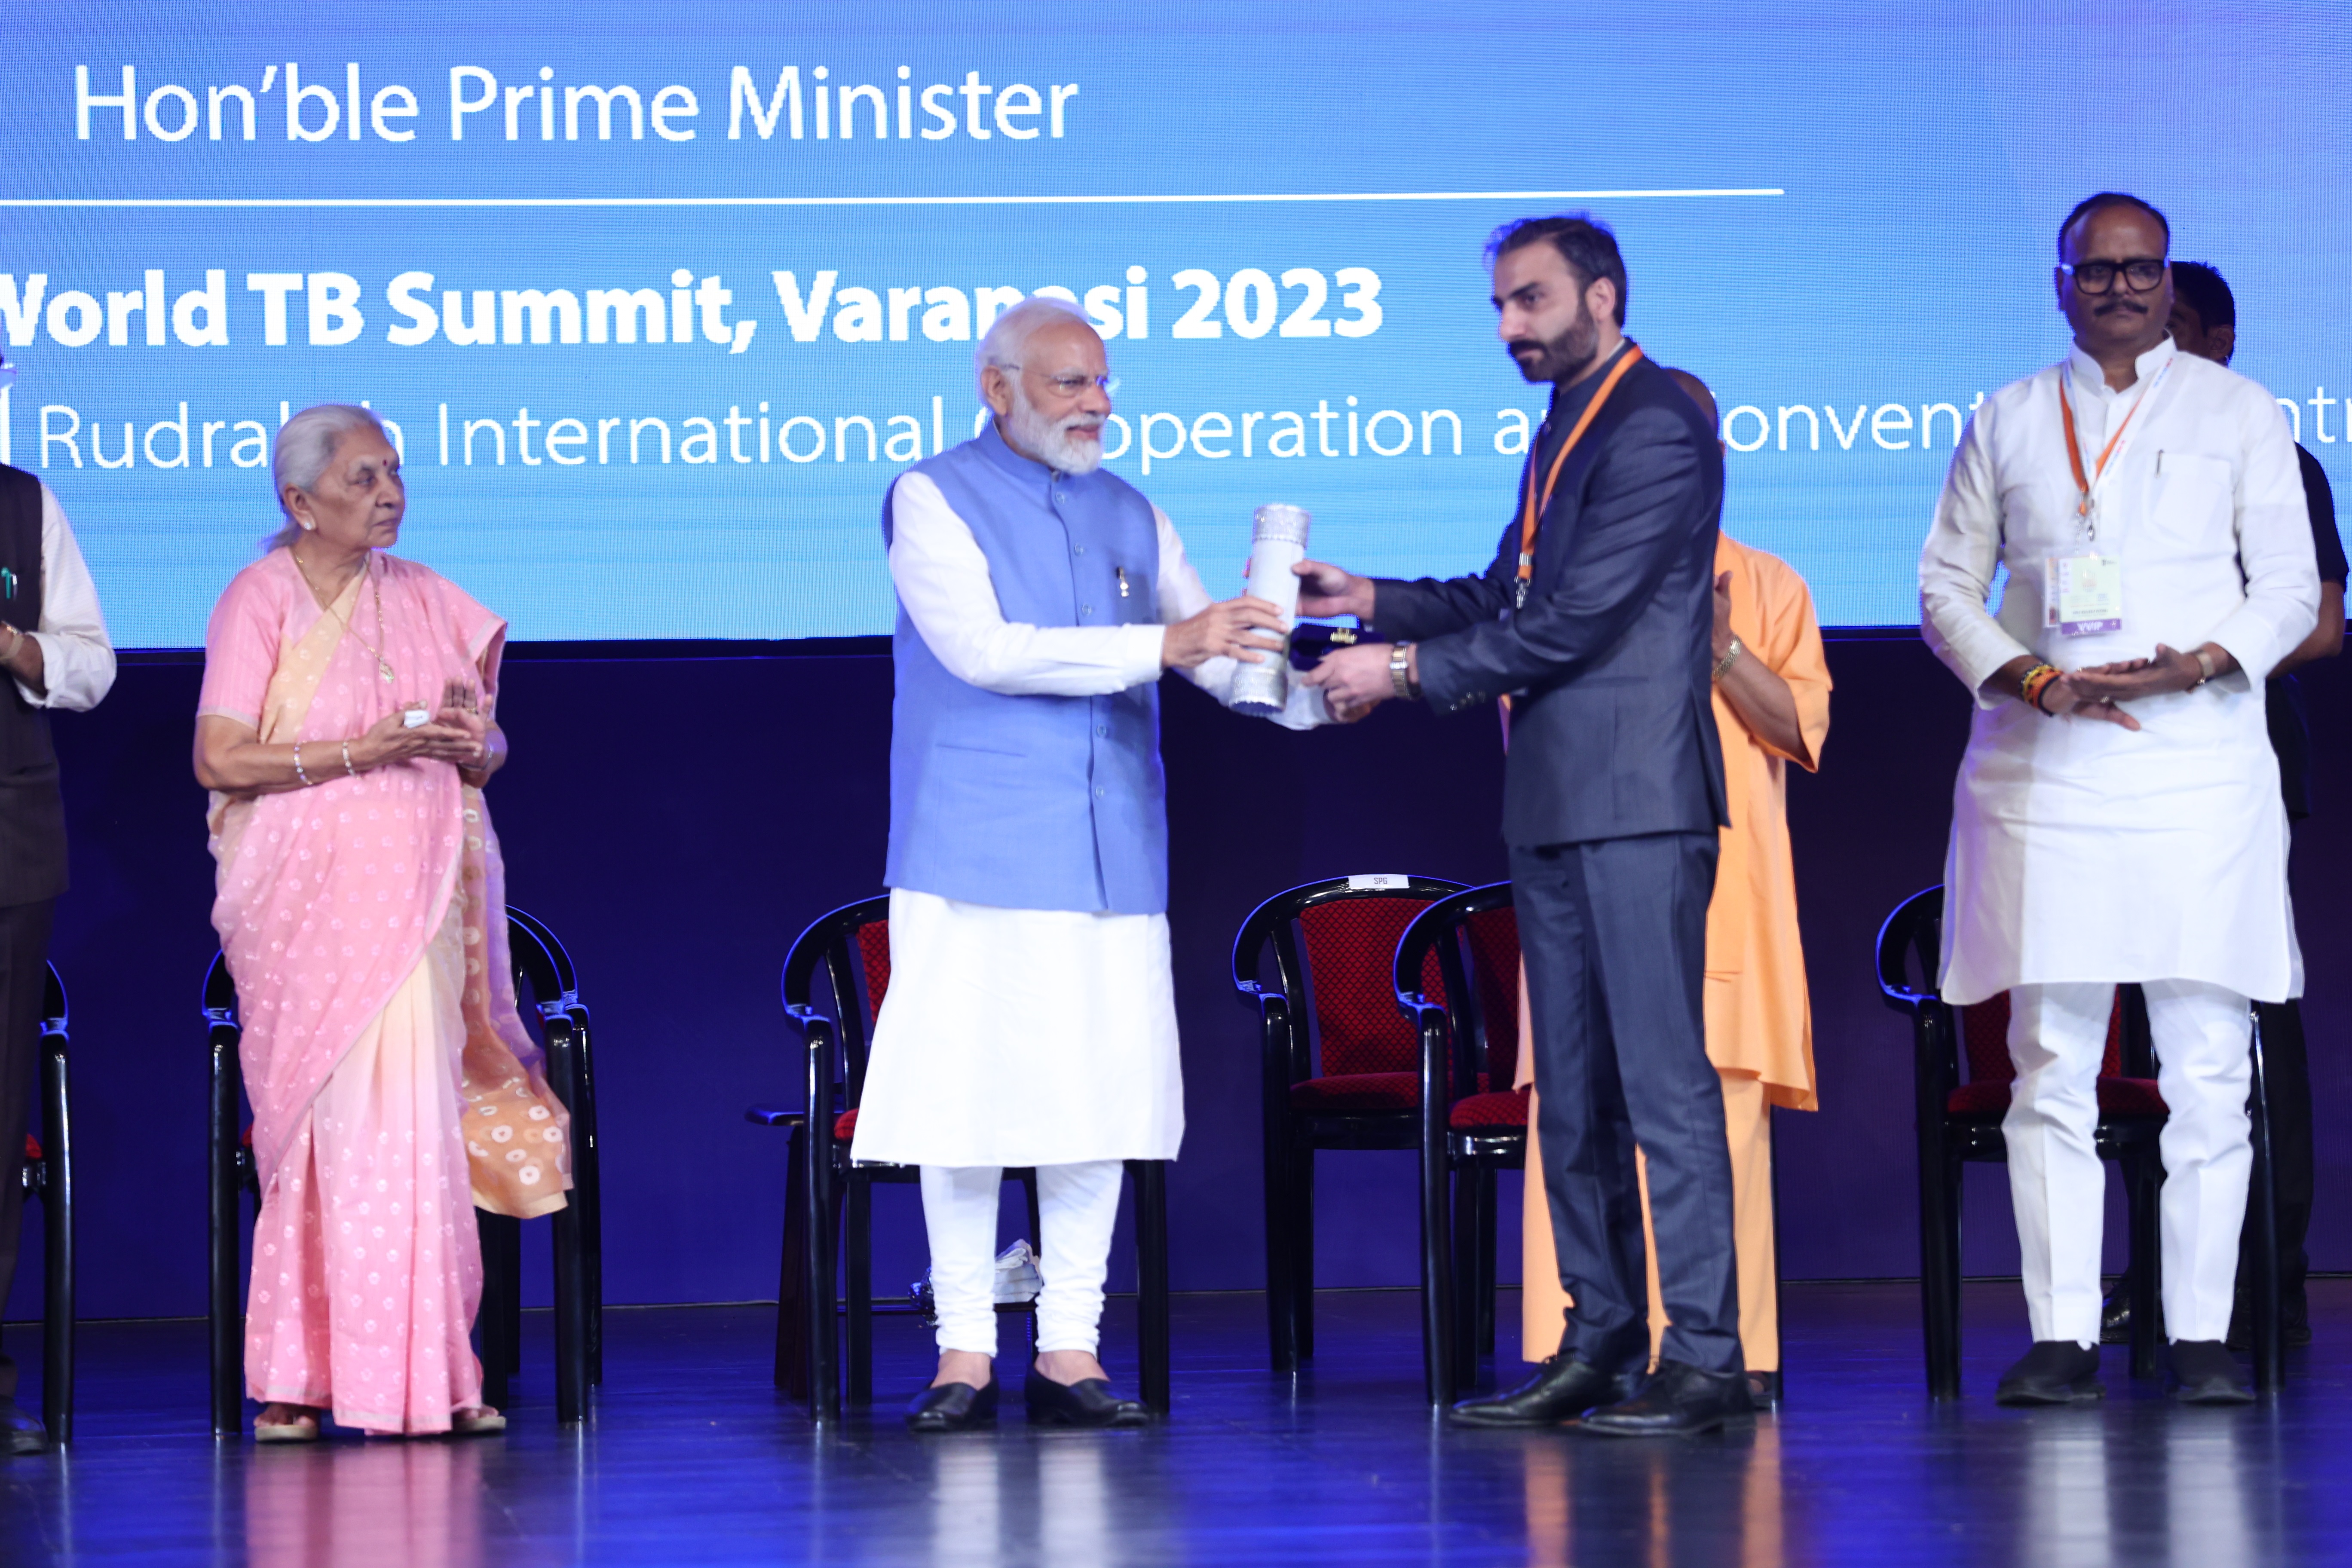 Hon'ble Prime Minister at One World TB Summit, Varanasi 2023